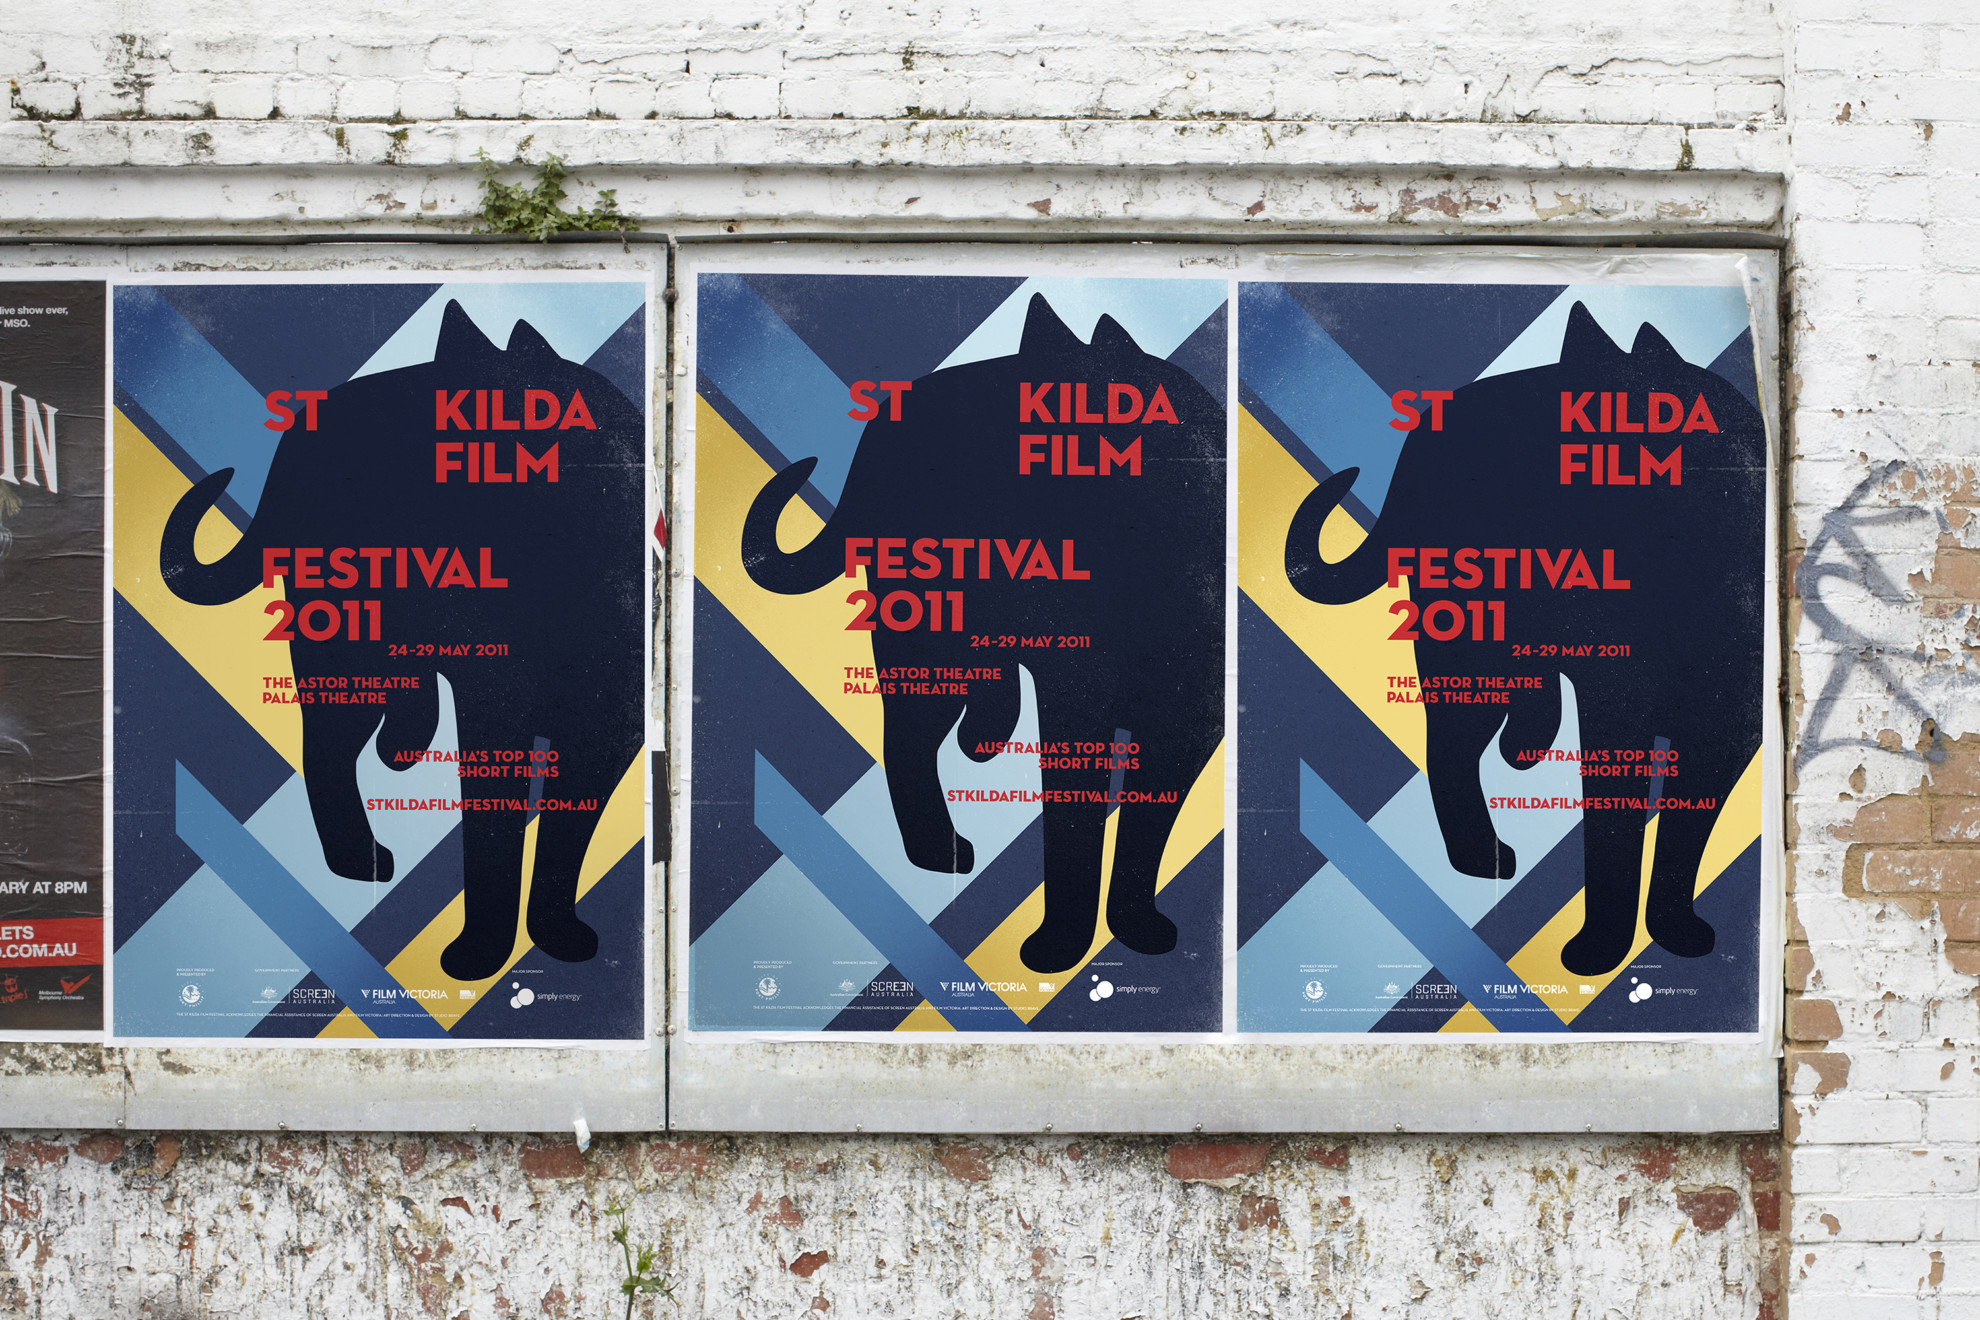 St Kilda Film Festival - Poster